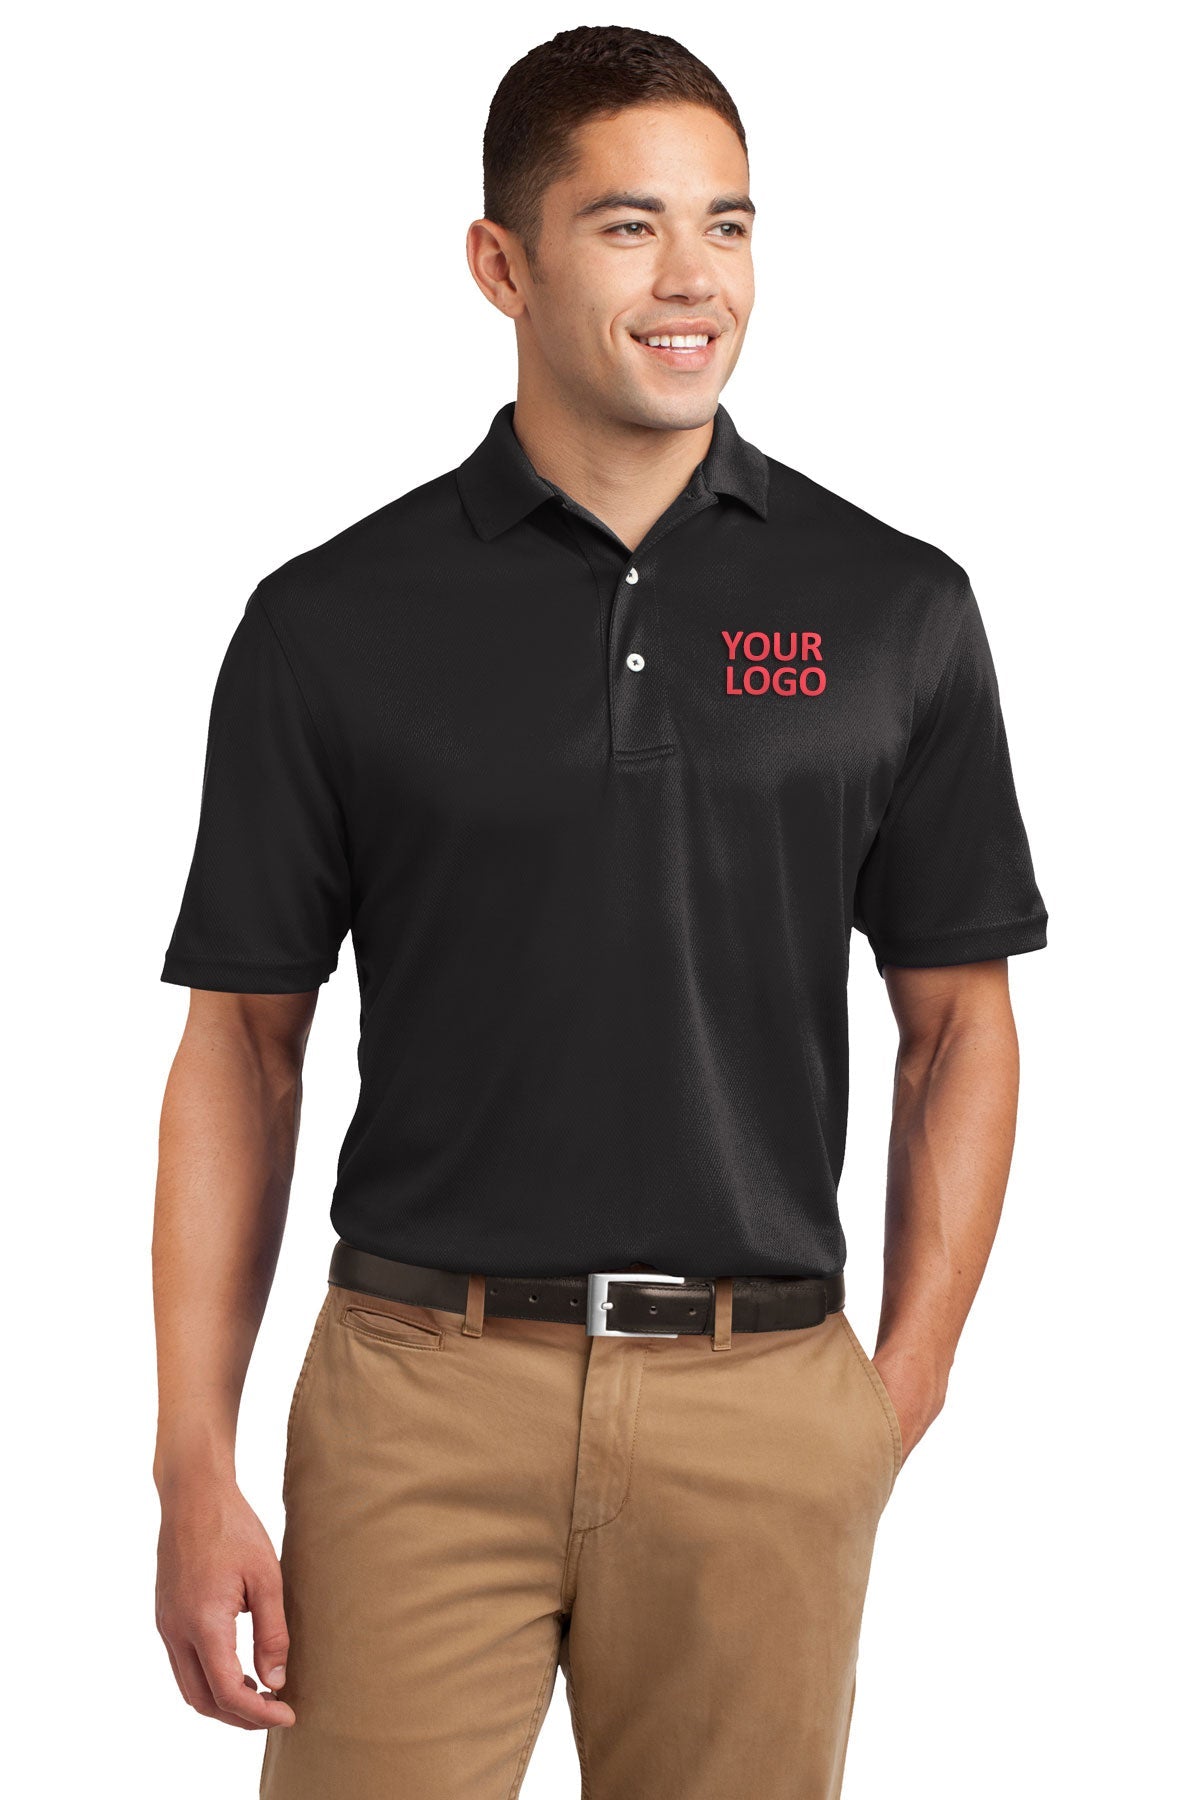 Sport-Tek Black TK469 quality polo shirts with company logo